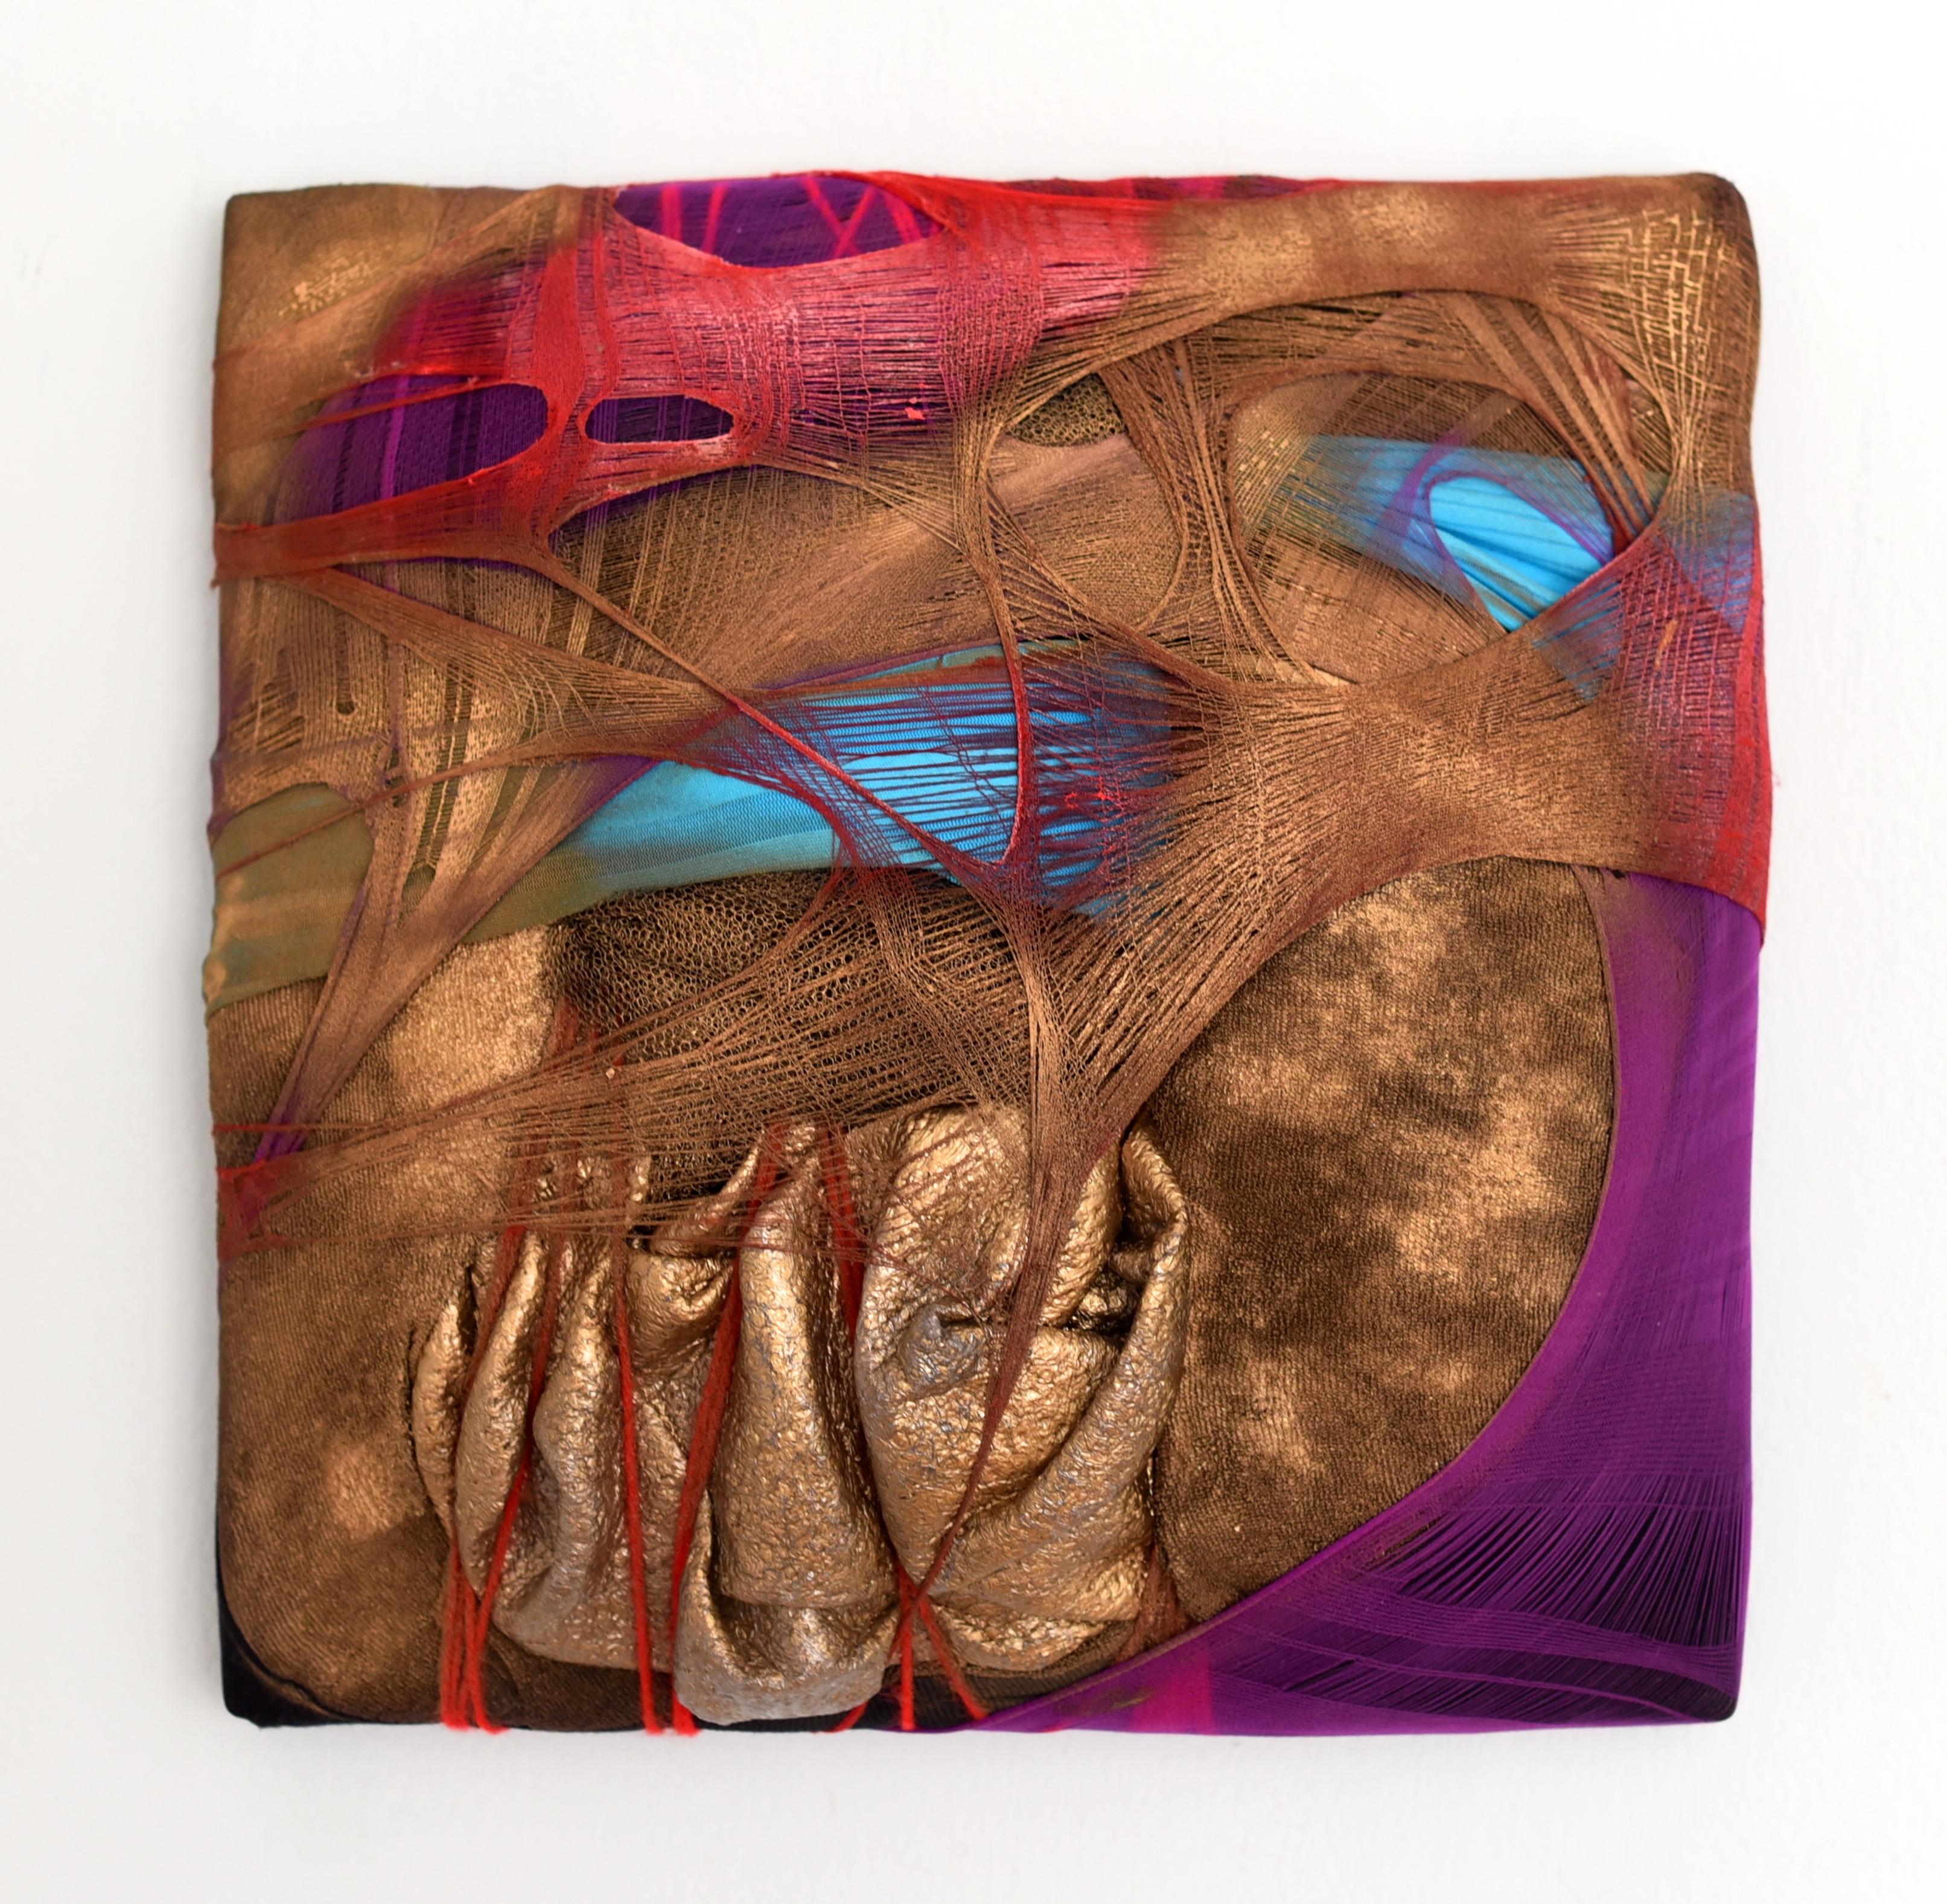 Anna-Lena Sauer Abstract Sculpture - Wall Pillow 3 gold metallic fabric contemporary abstract painting textile art